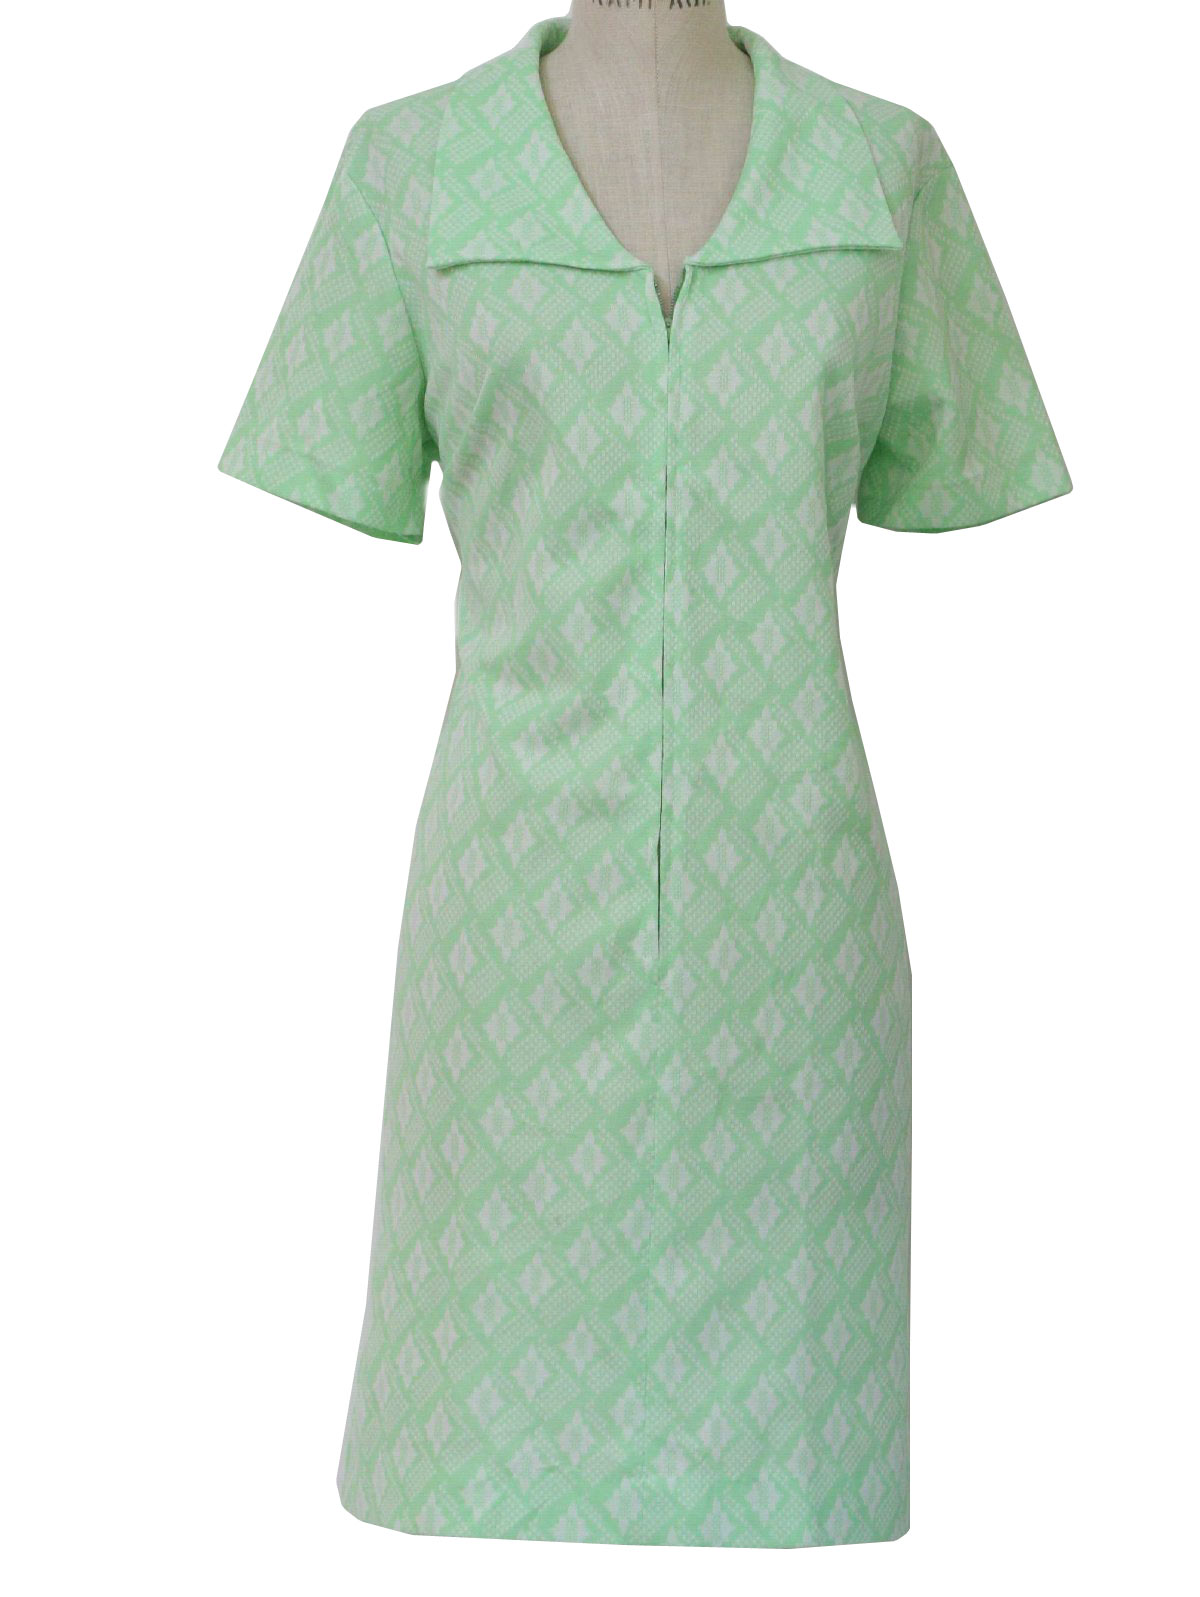 Retro 1960's Dress (Home Sewn) : 60s -Home Sewn- Womens bright green ...